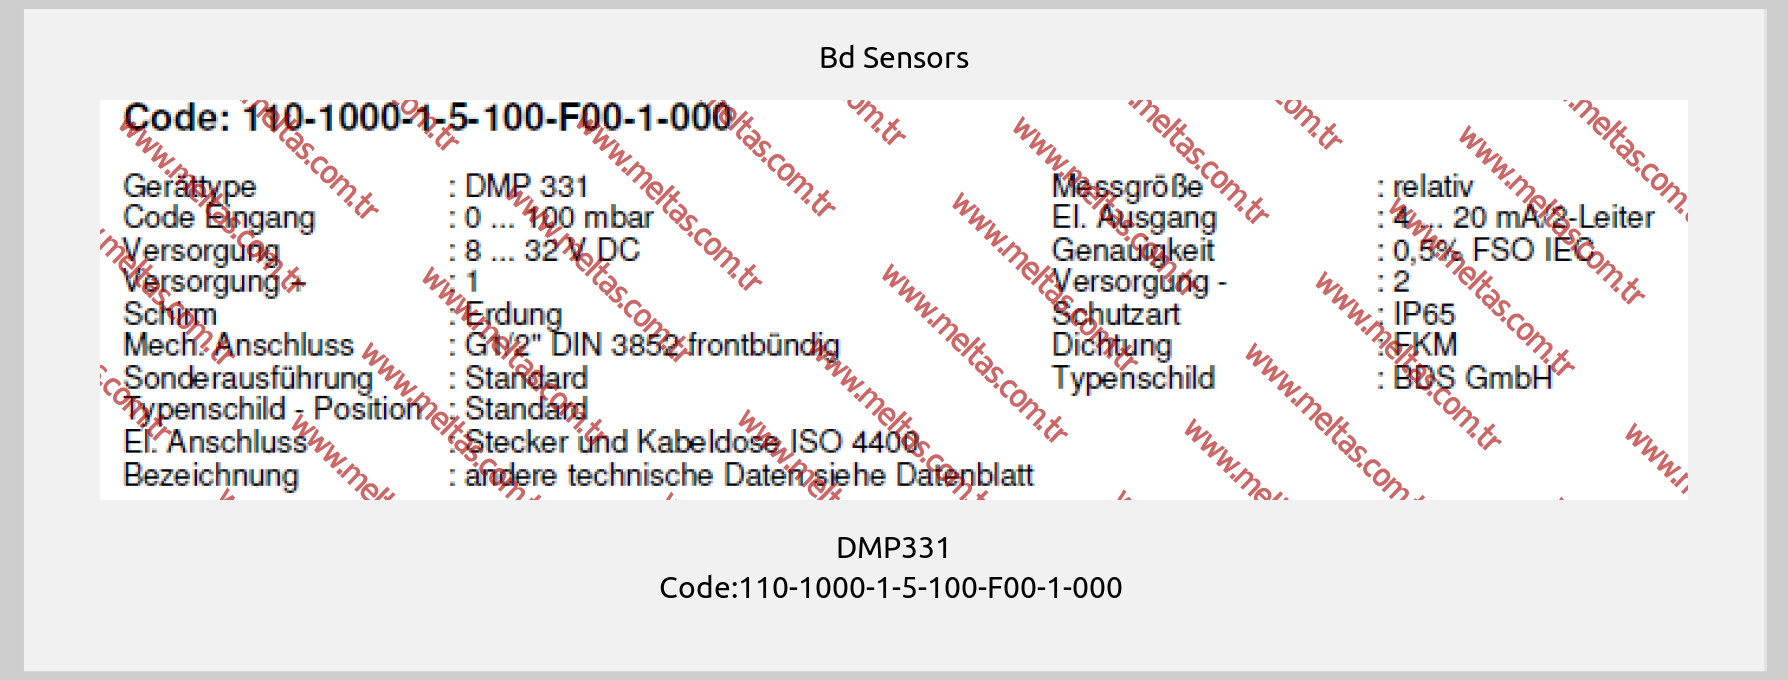 Bd Sensors - DMP331 Code:110-1000-1-5-100-F00-1-000 